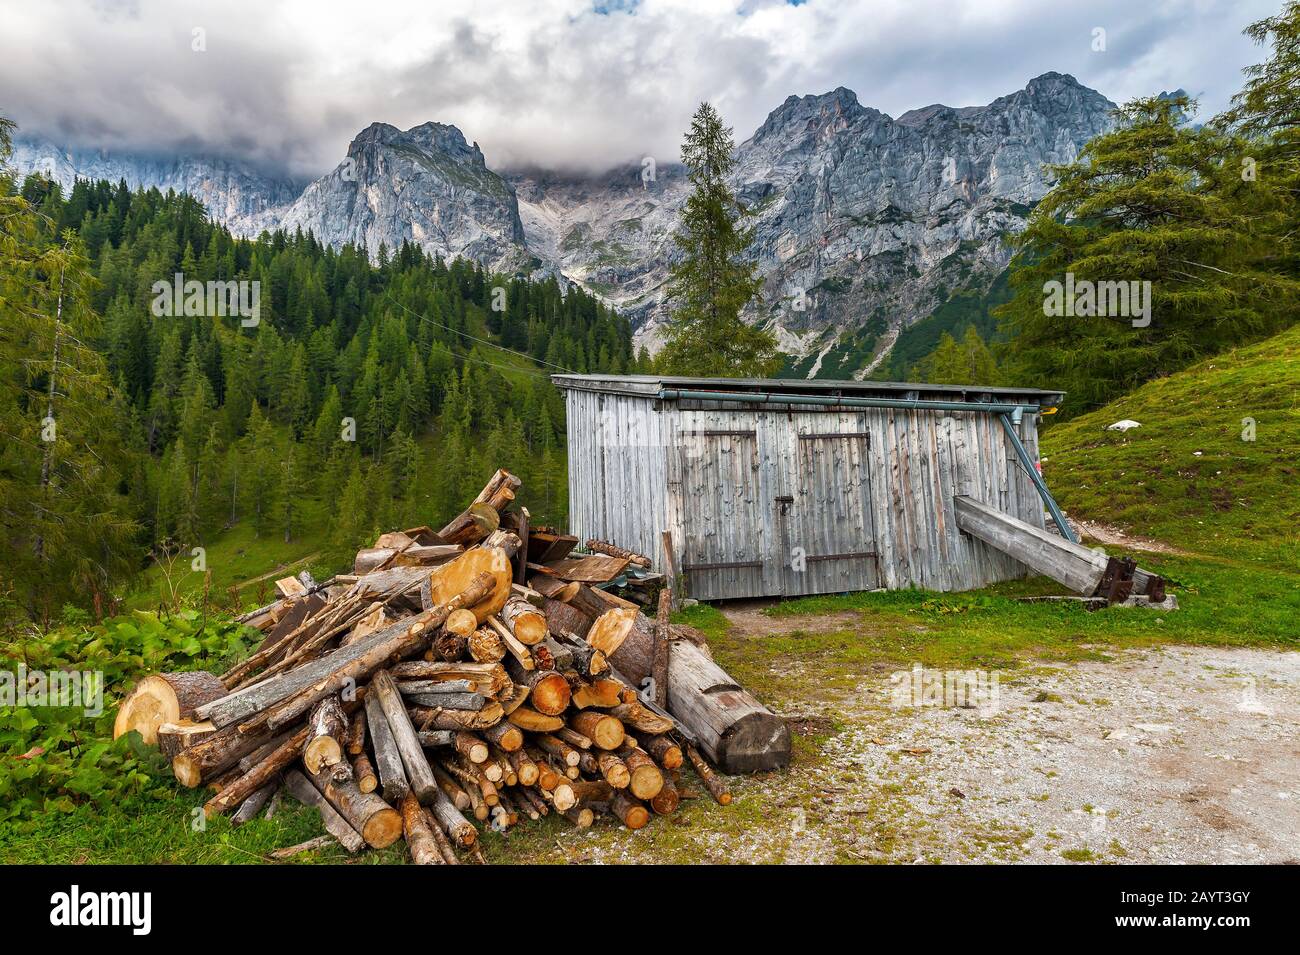 Scenic view in Austrian alps Stock Photo